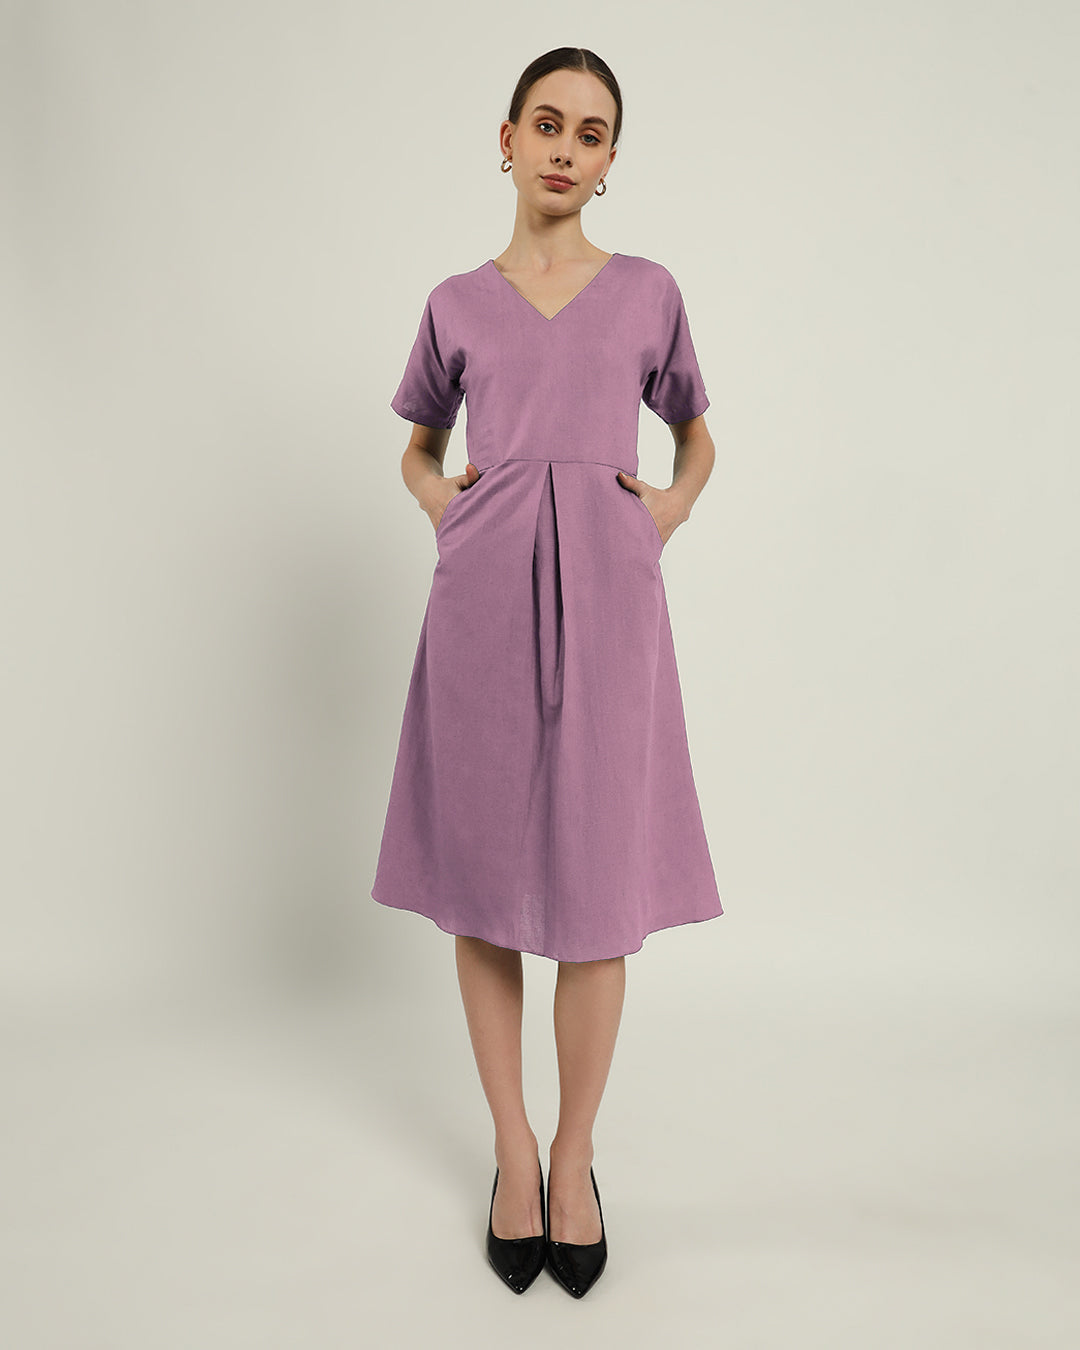 The Memphis Purple Swirl Cotton Dress